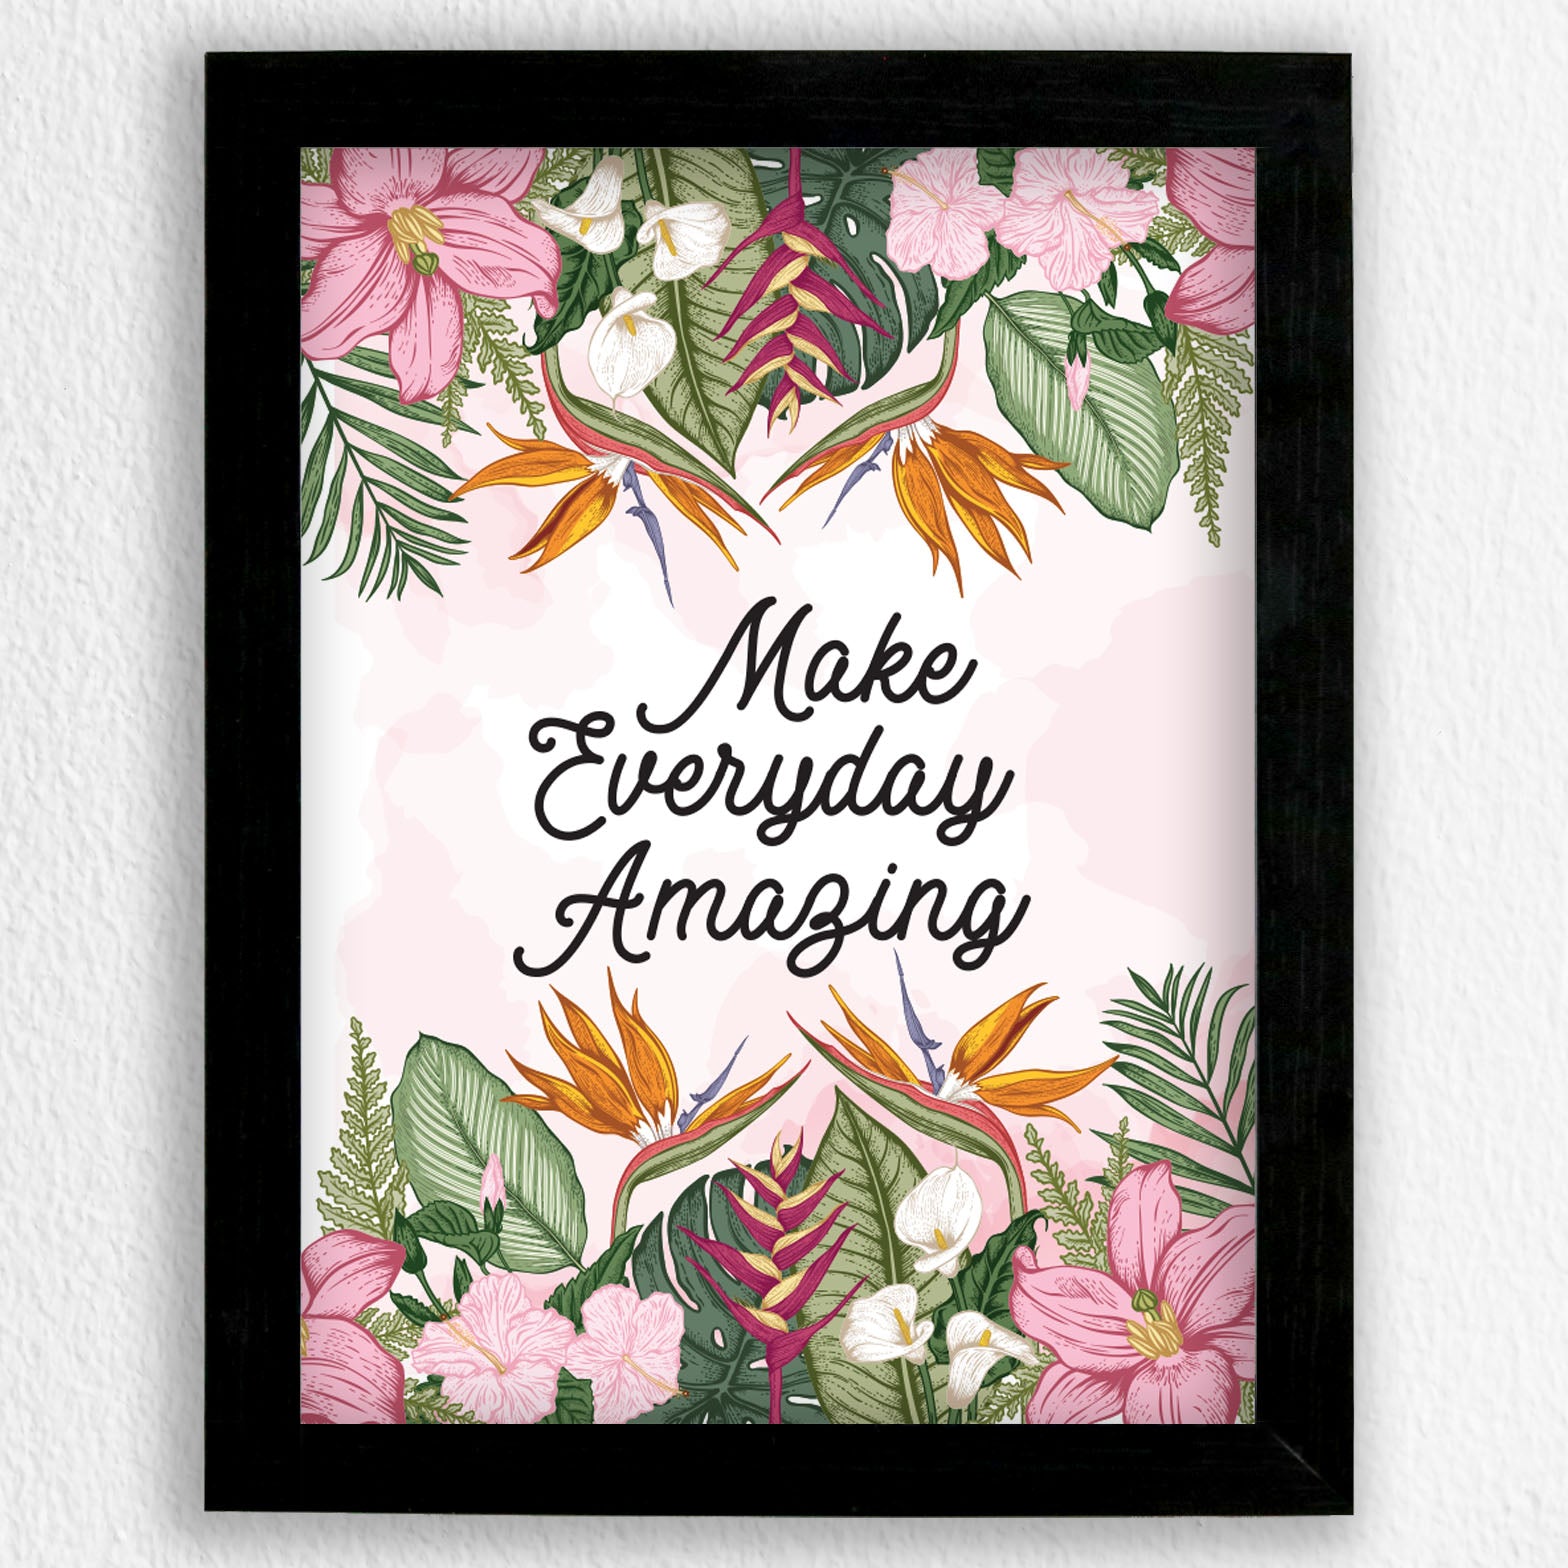 Make Everyday Amazing - Art Frame